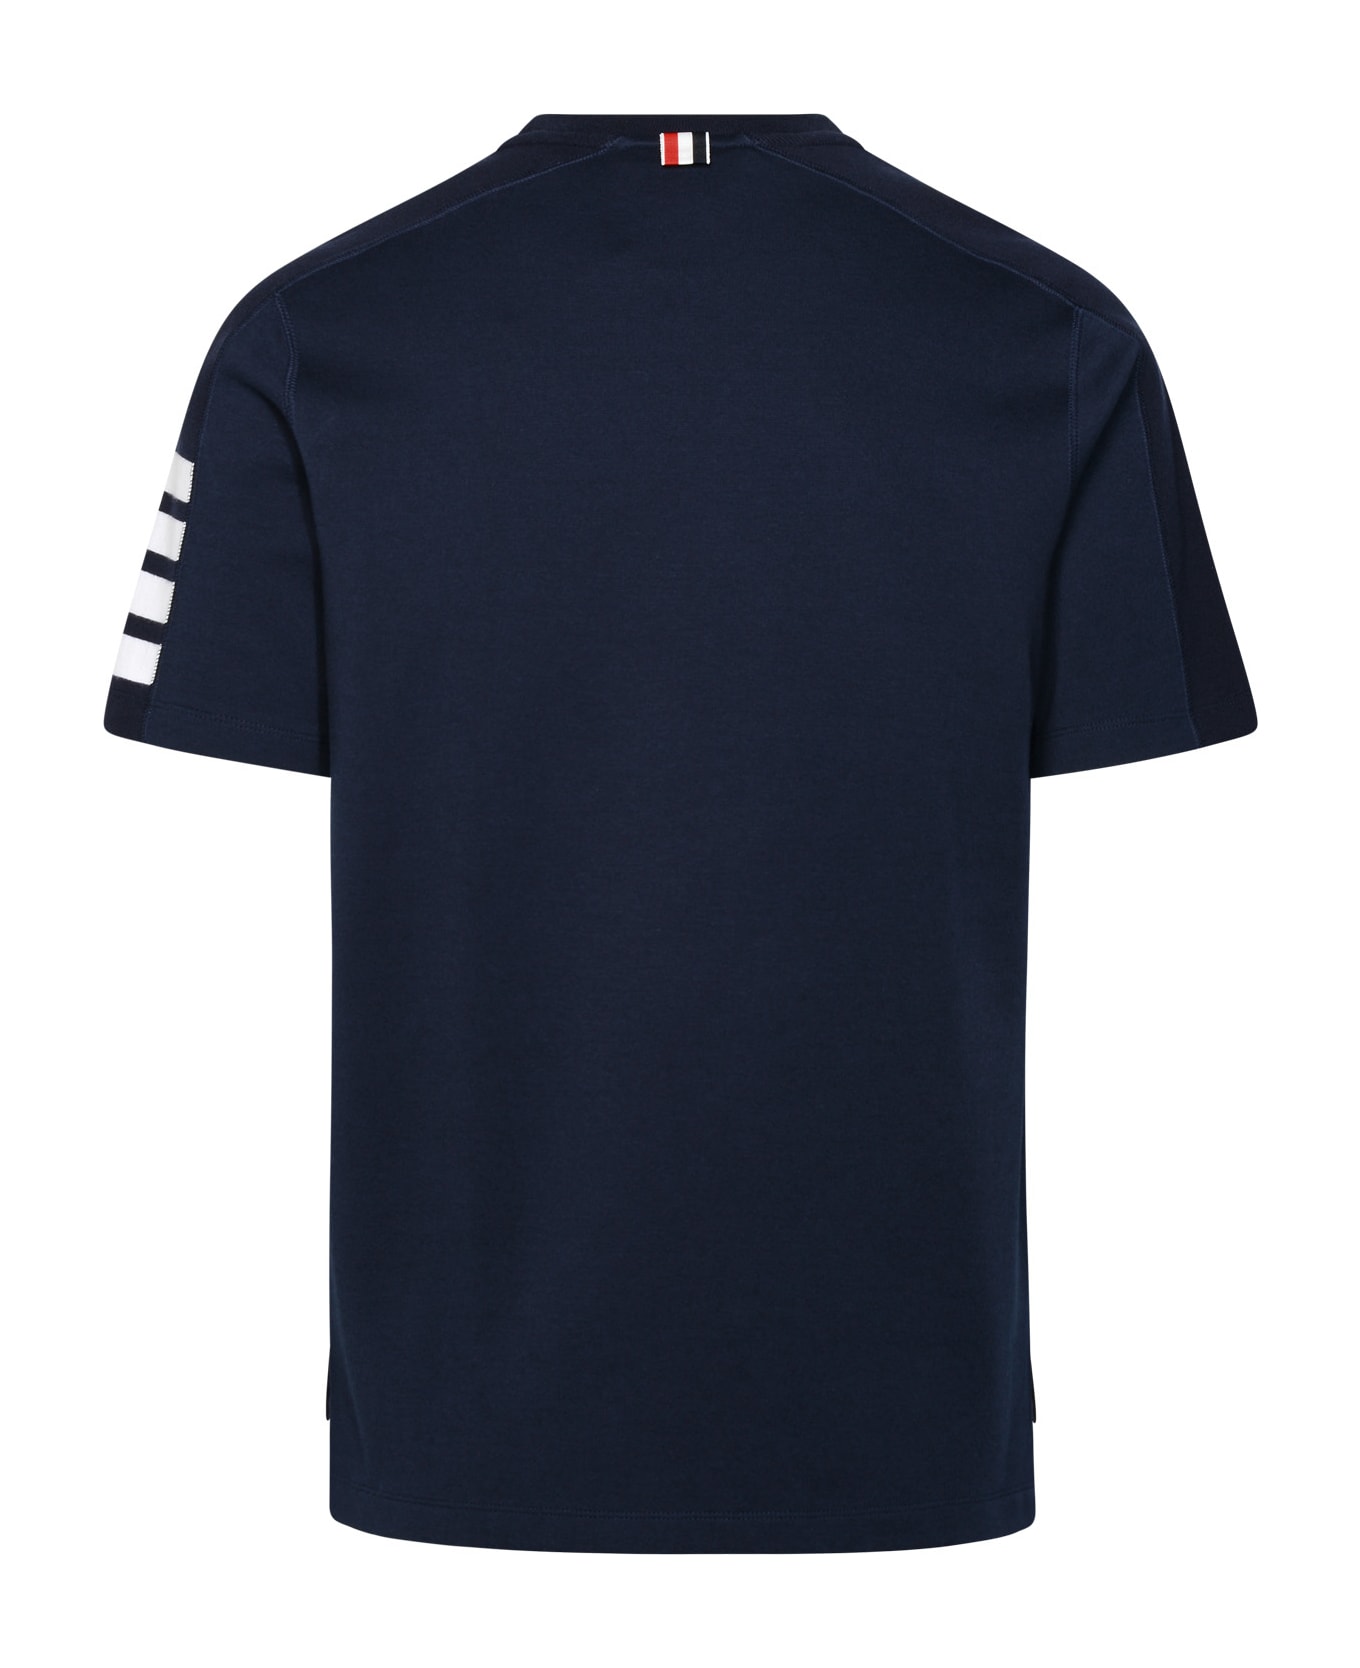 Thom Browne Navy Cotton T-shirt - Navy シャツ